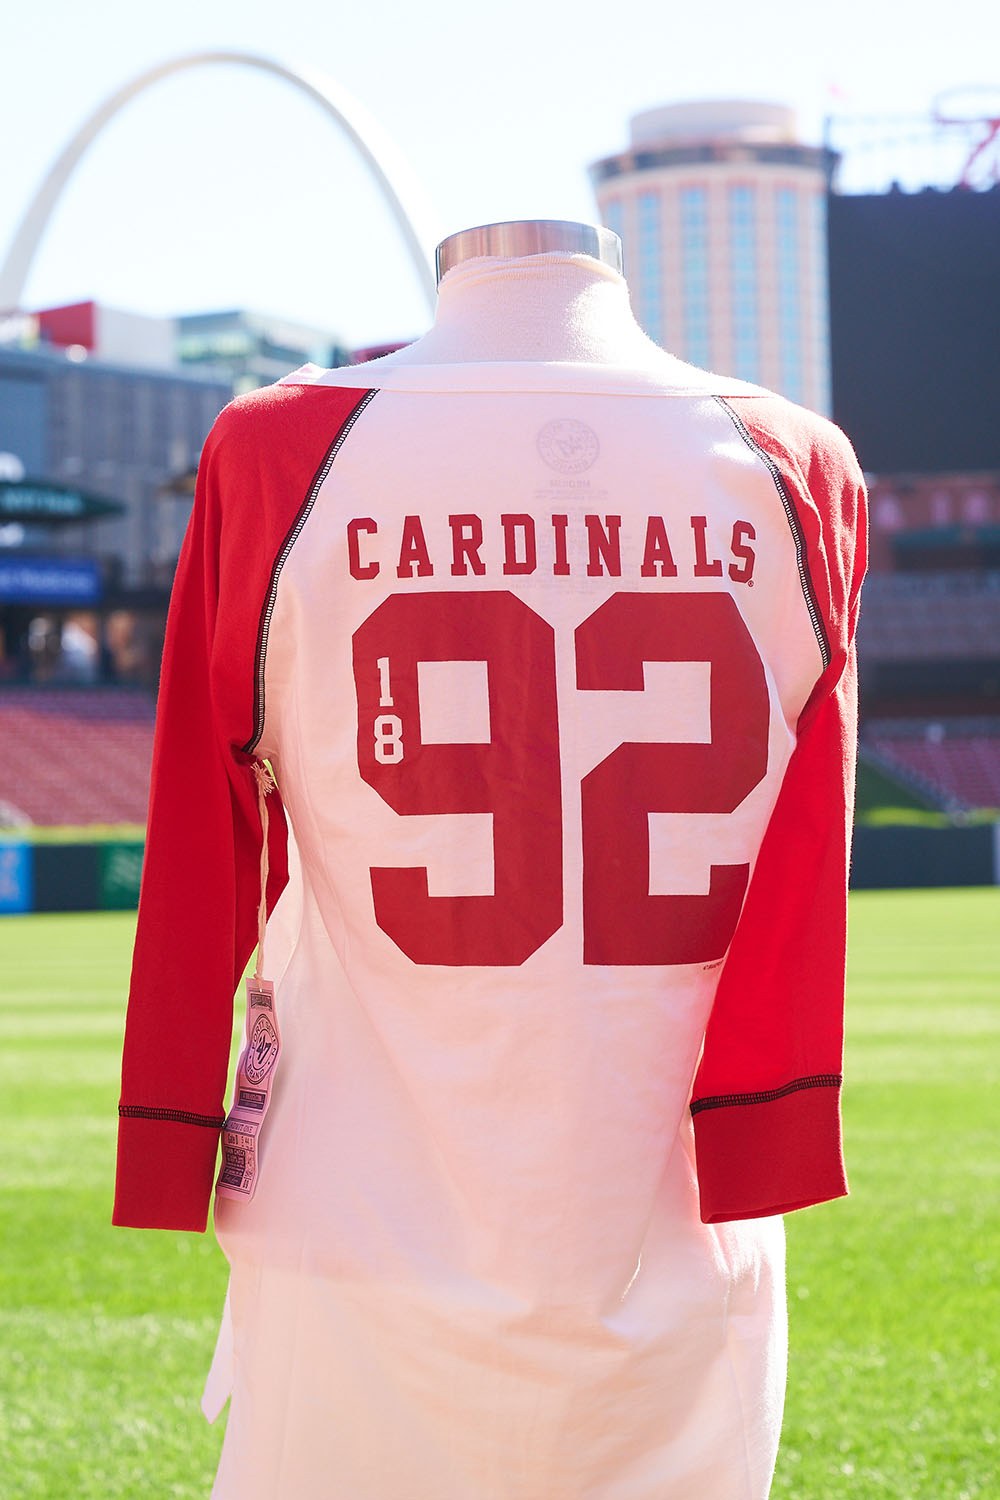 red st. louis cardinals jersey